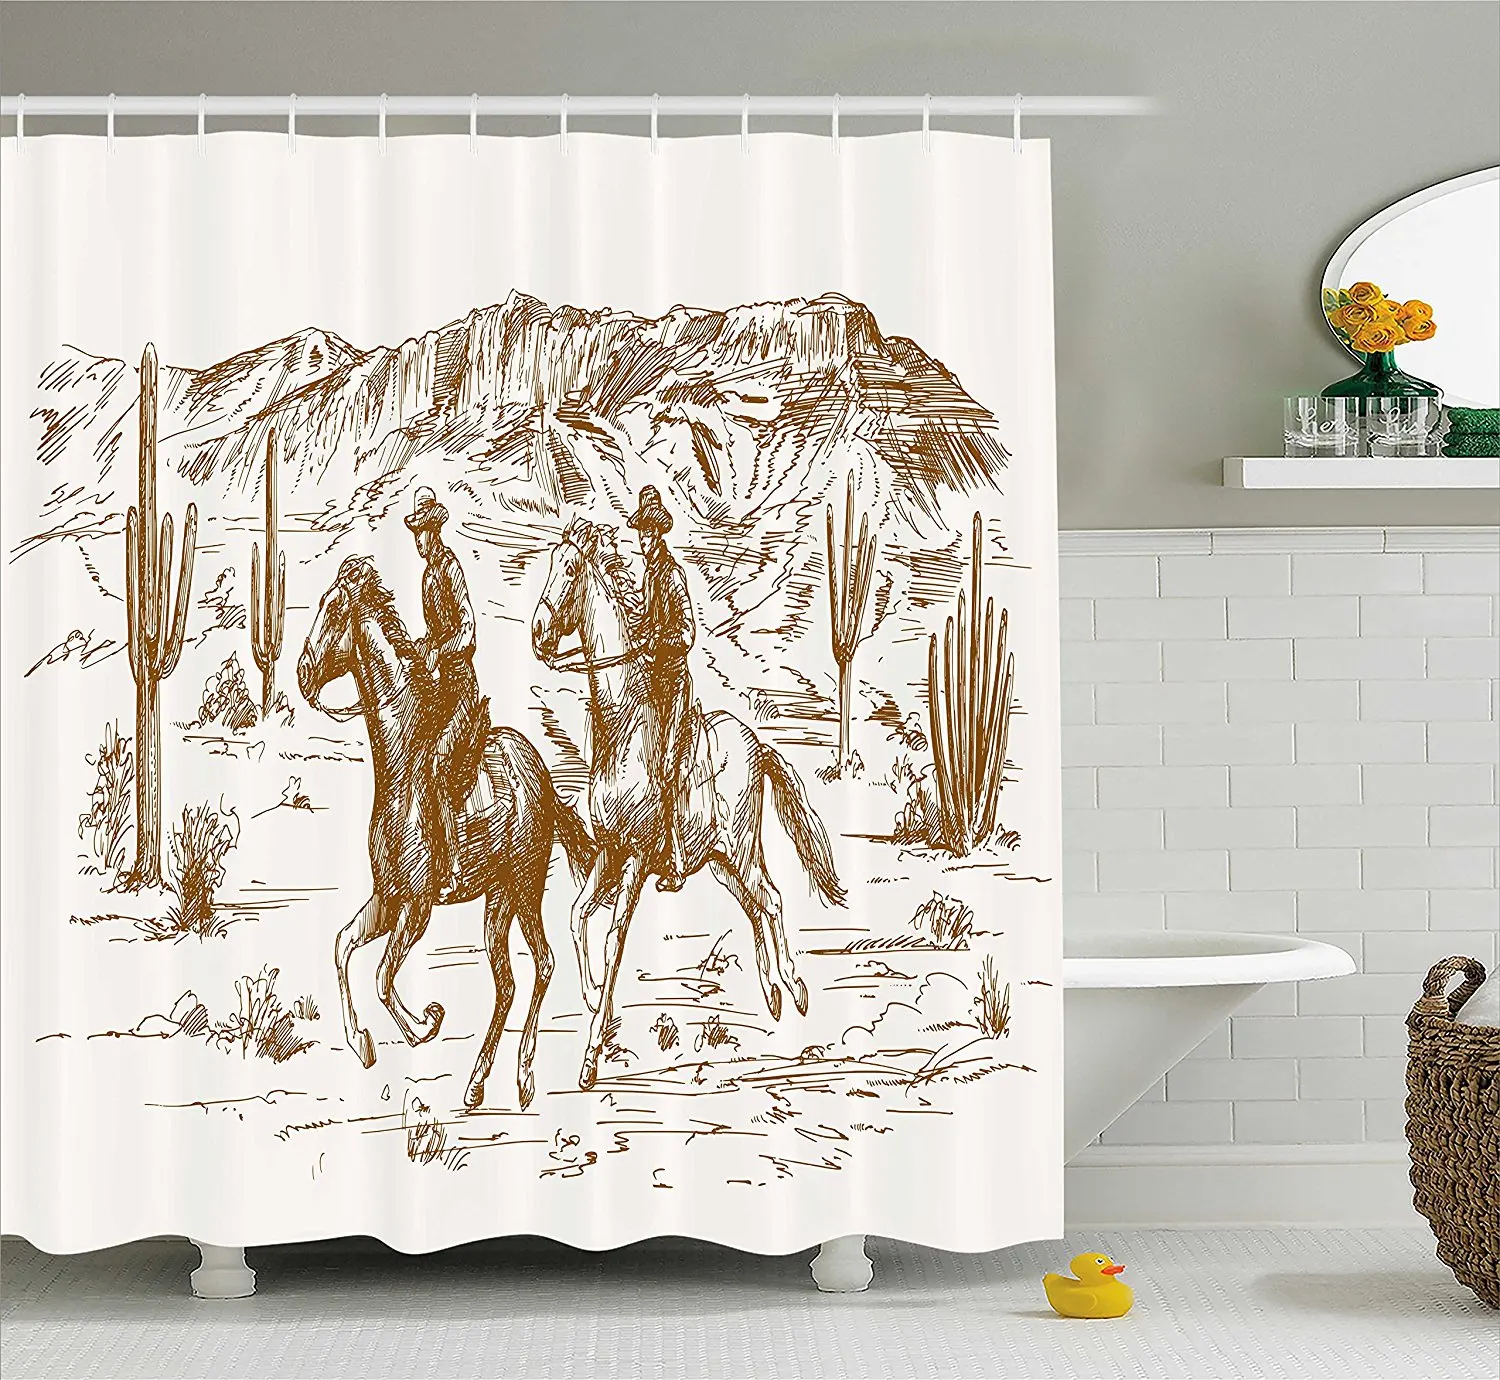 The Horse Theme Waterproof Fabric Home Decor Shower Curtain Bathroom Mat